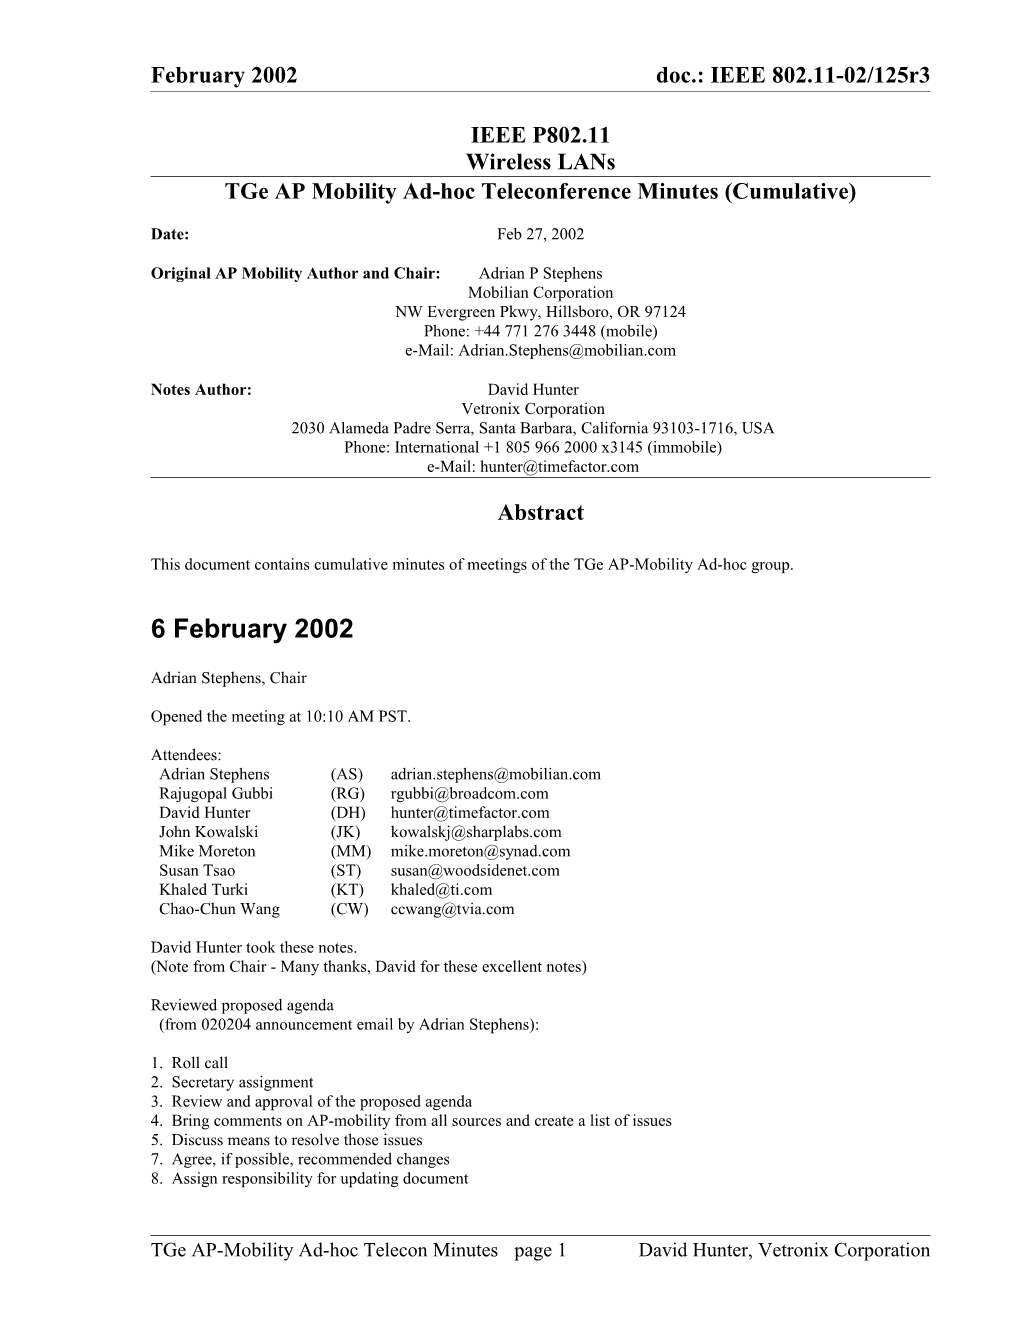 Tge AP Mobility Ad-Hoc Teleconference Minutes (Cumulative)